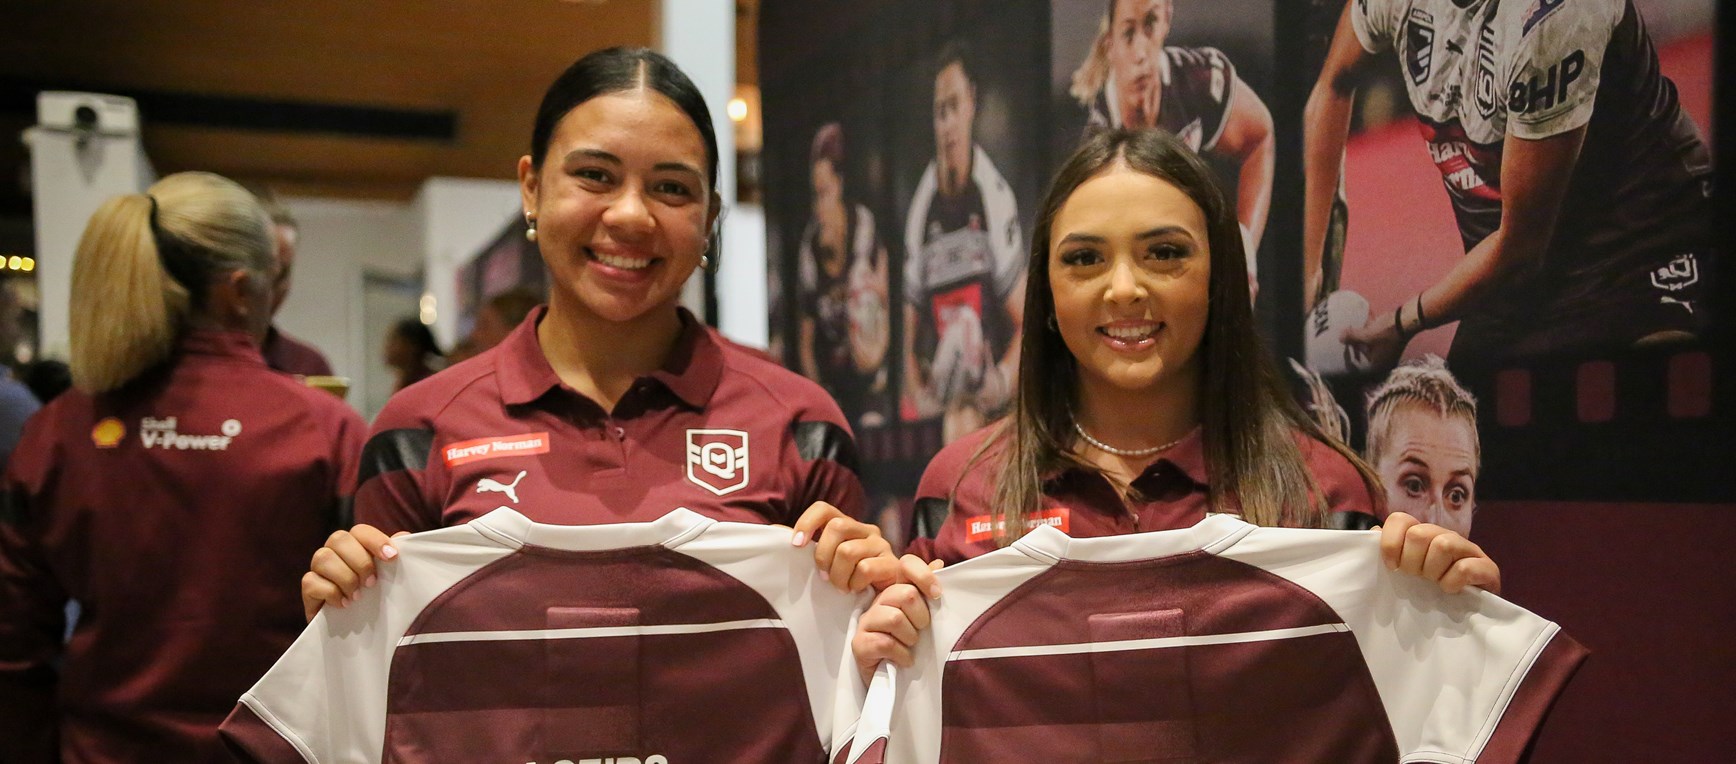 In pictures: Queensland Under 19 women's jersey presentation